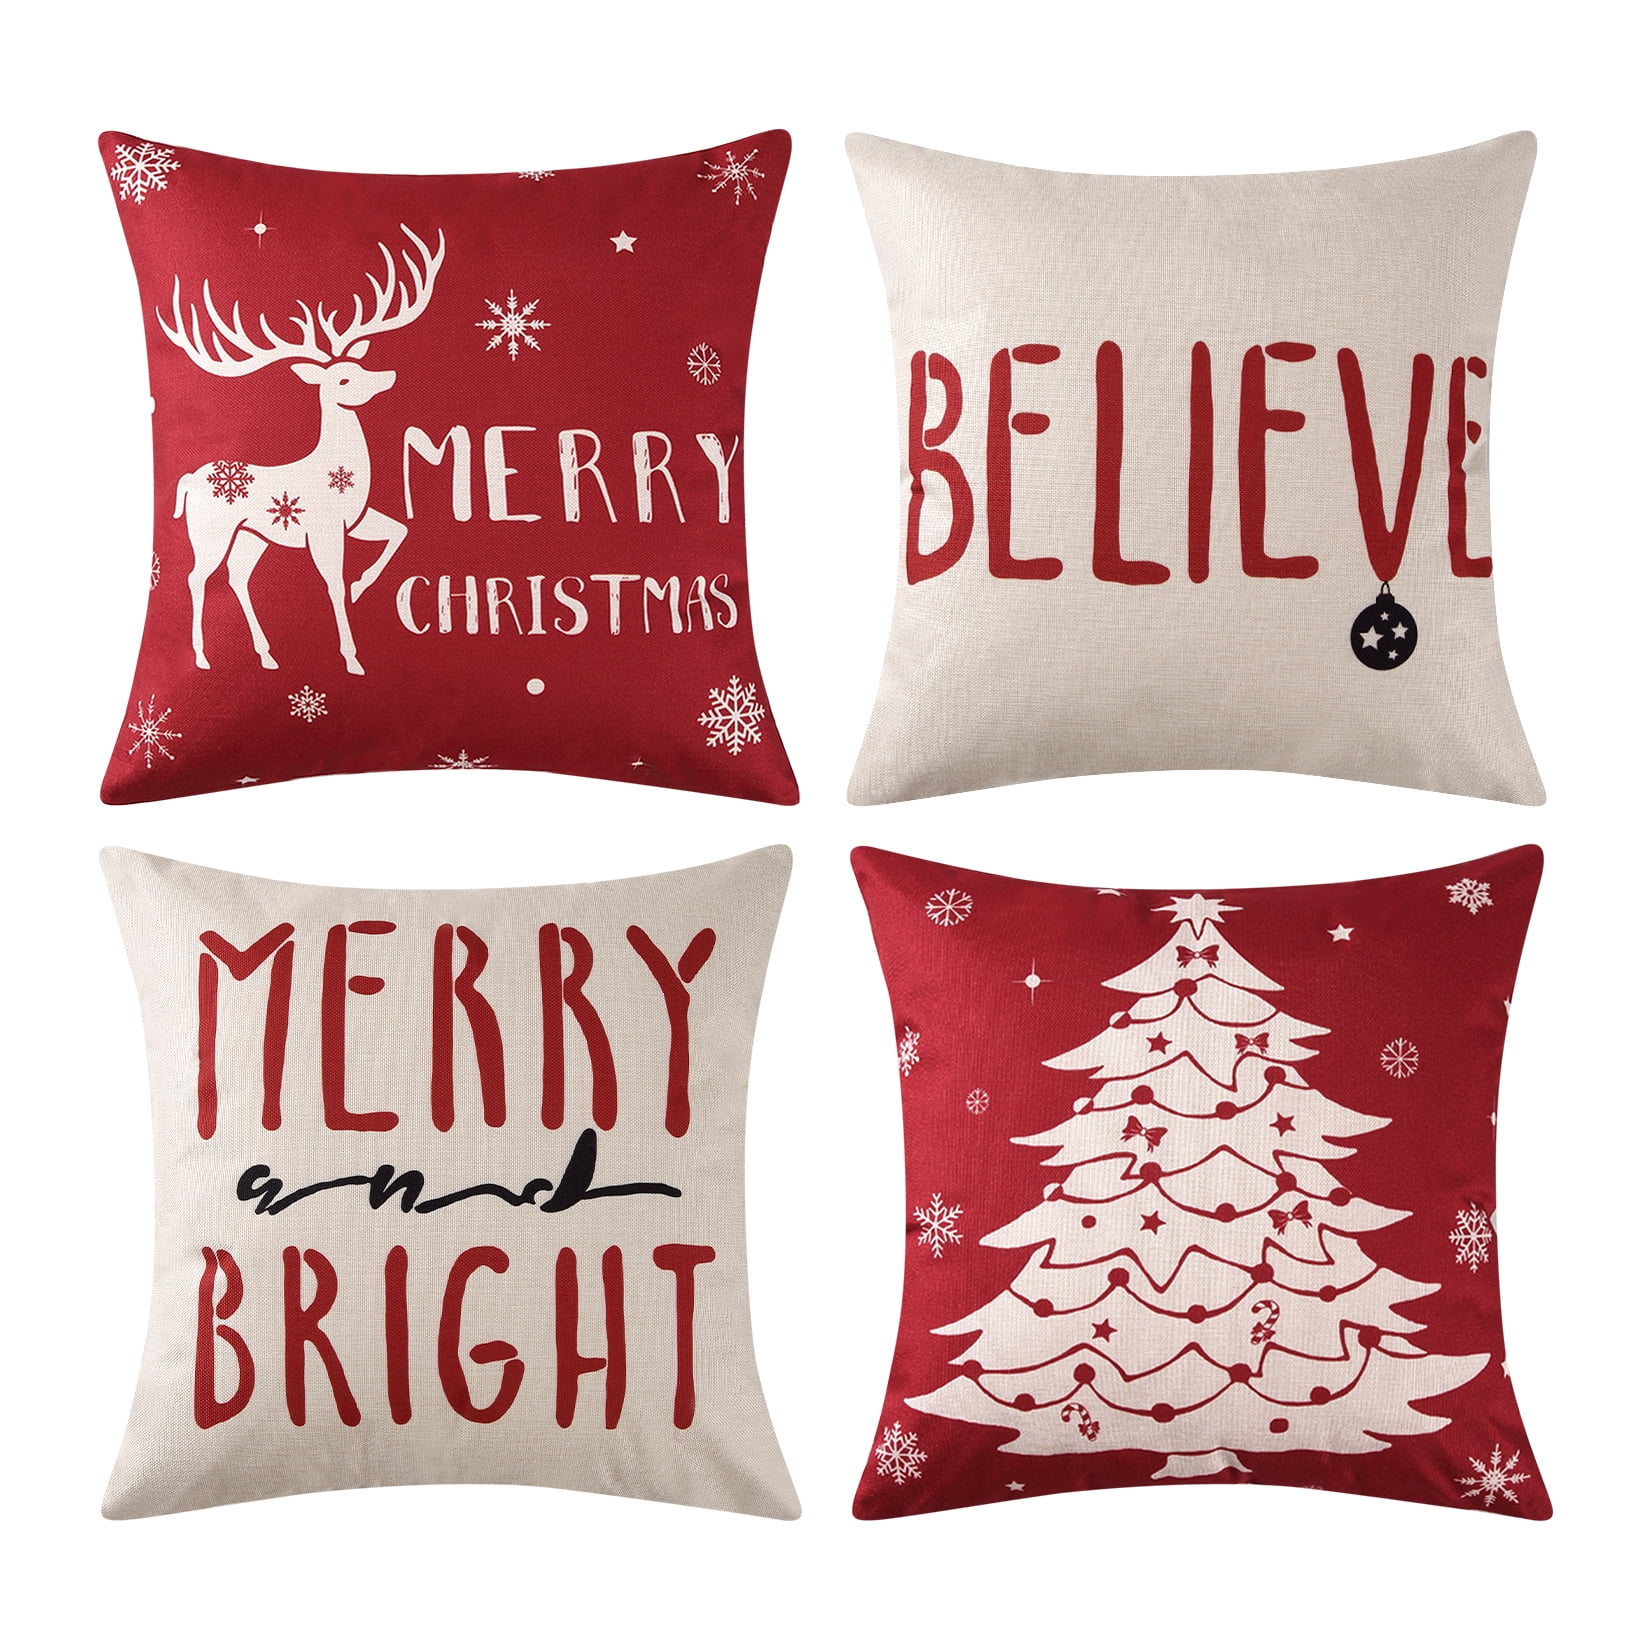 Beautiful Christmas Pillows  Christmas pillows, Christmas pillow, Christmas  sewing